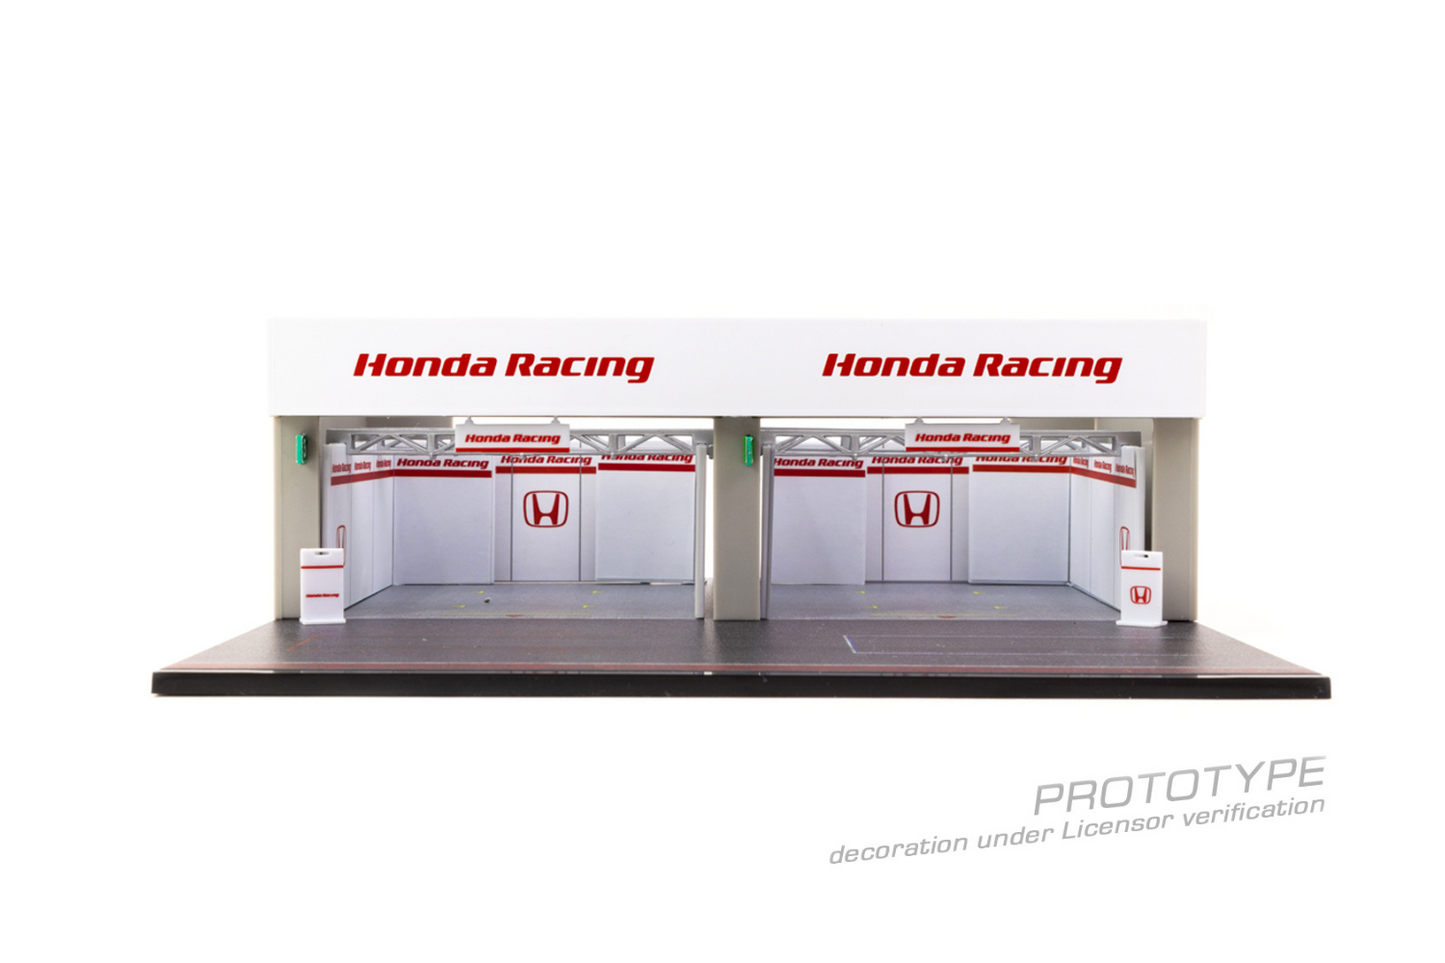 Tarmac Works 1/64 Pit Garage Diorama, Honda Racing